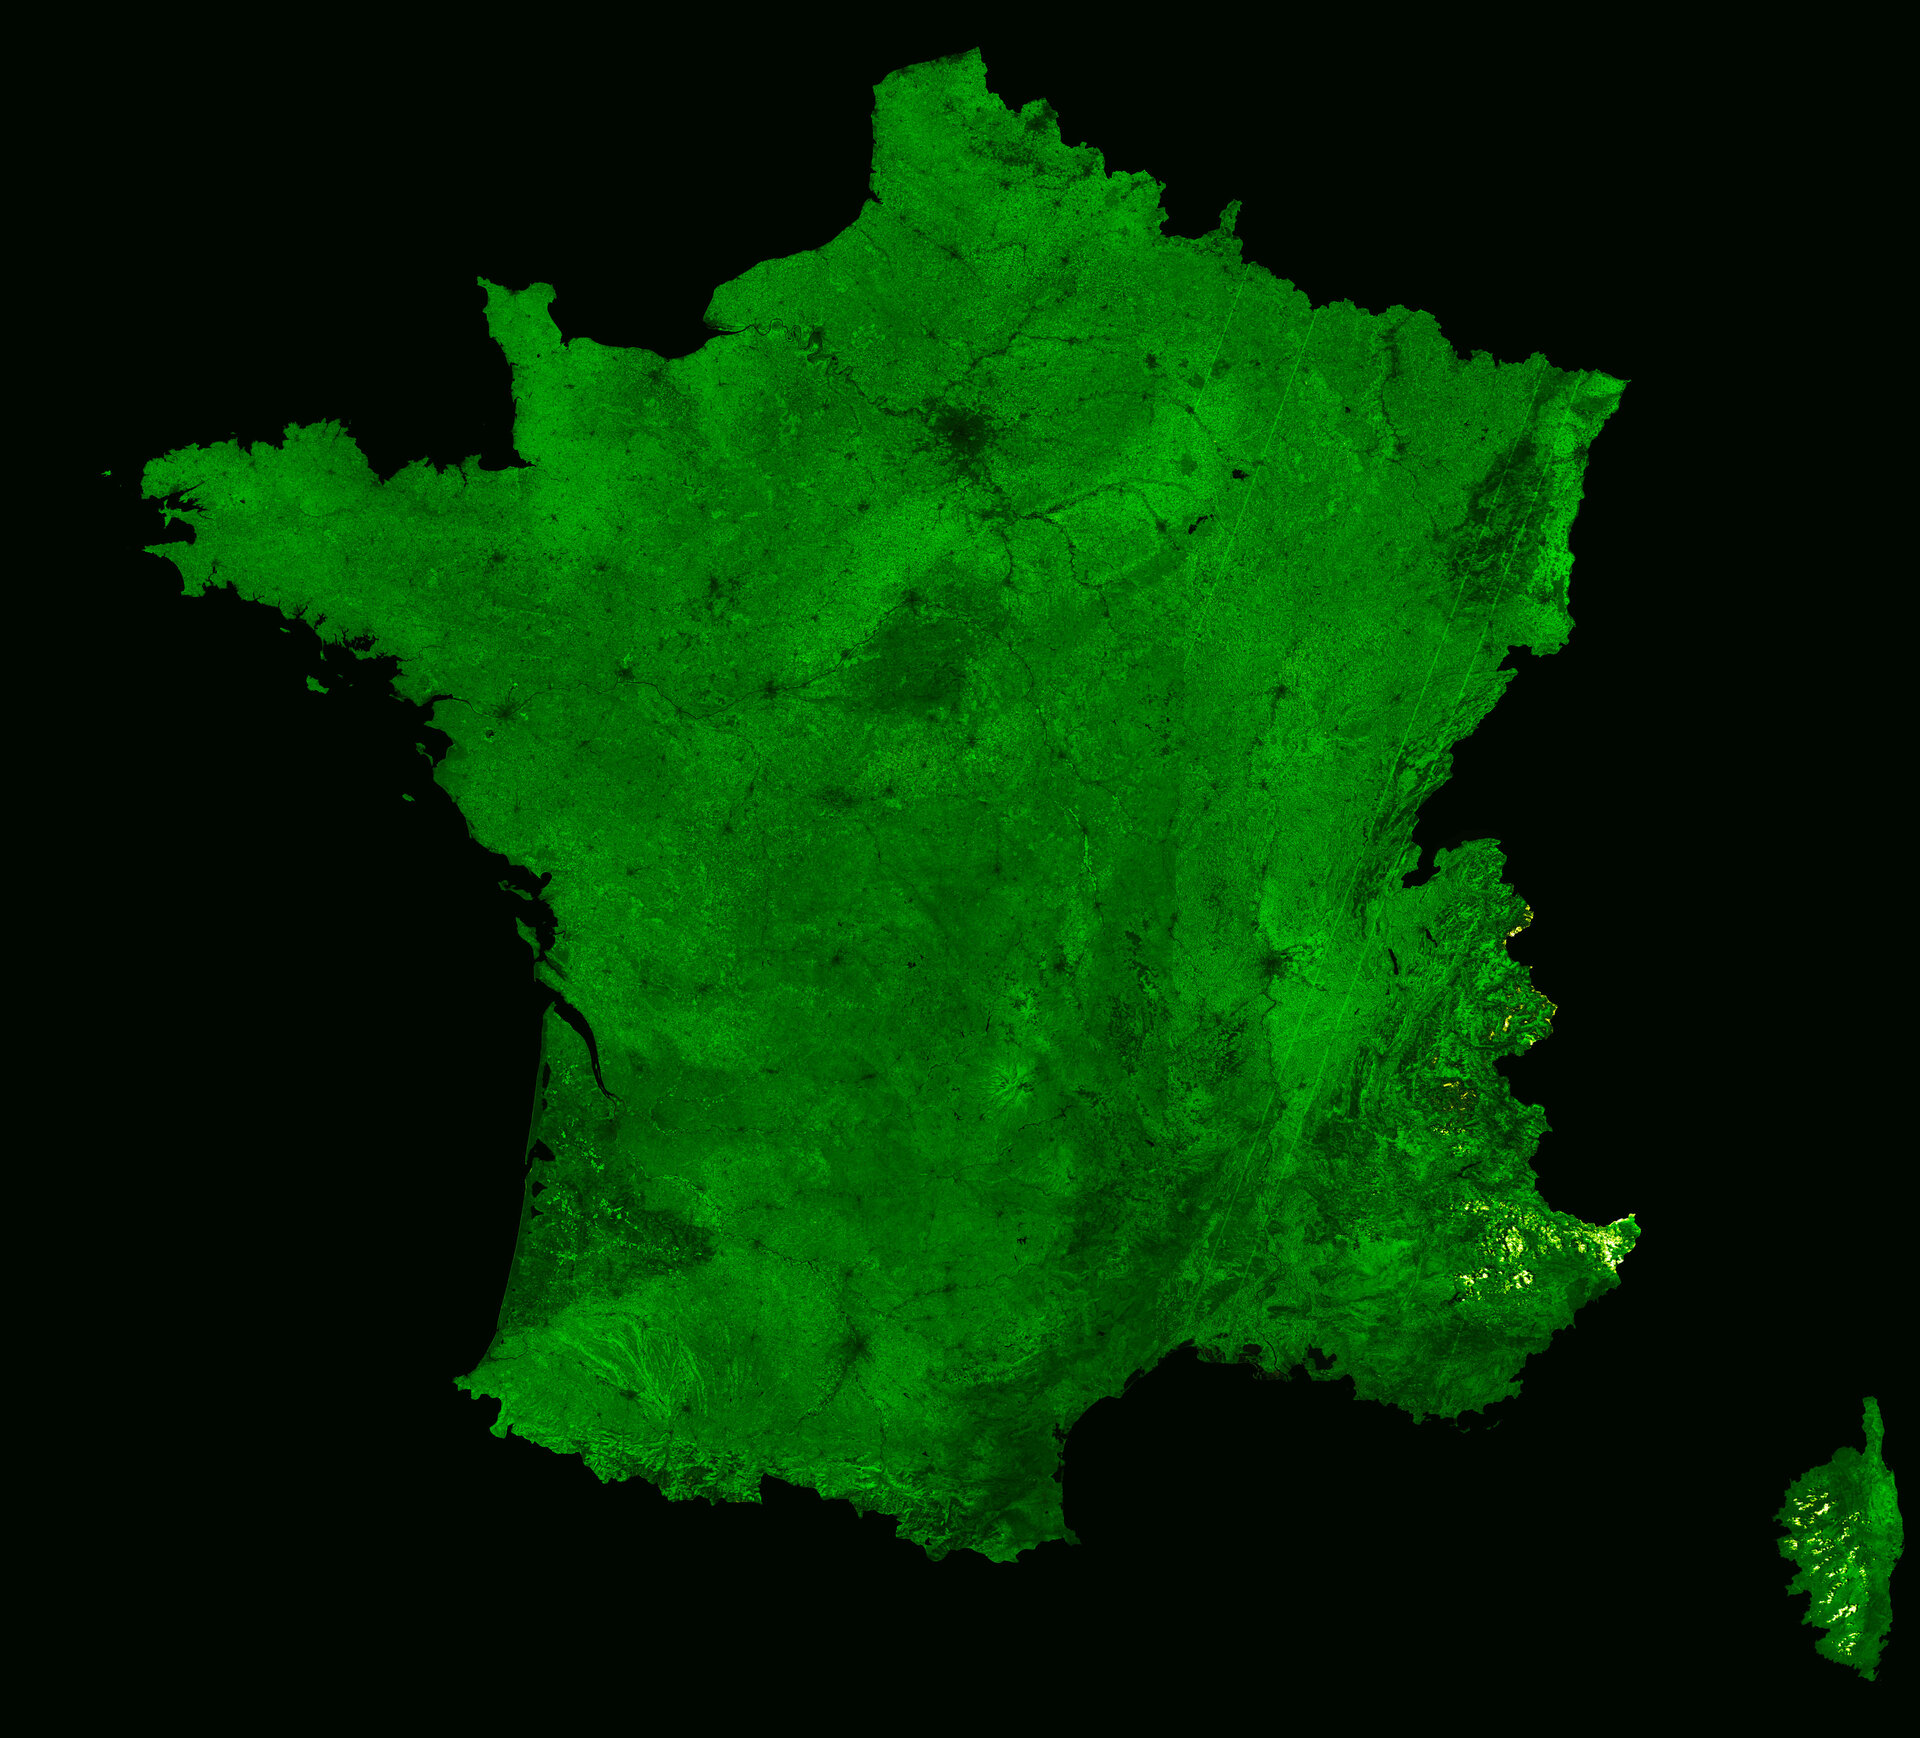 France, as seen by Proba-V, licenced under Creative Commons CC BY-SA 3.0 IGO